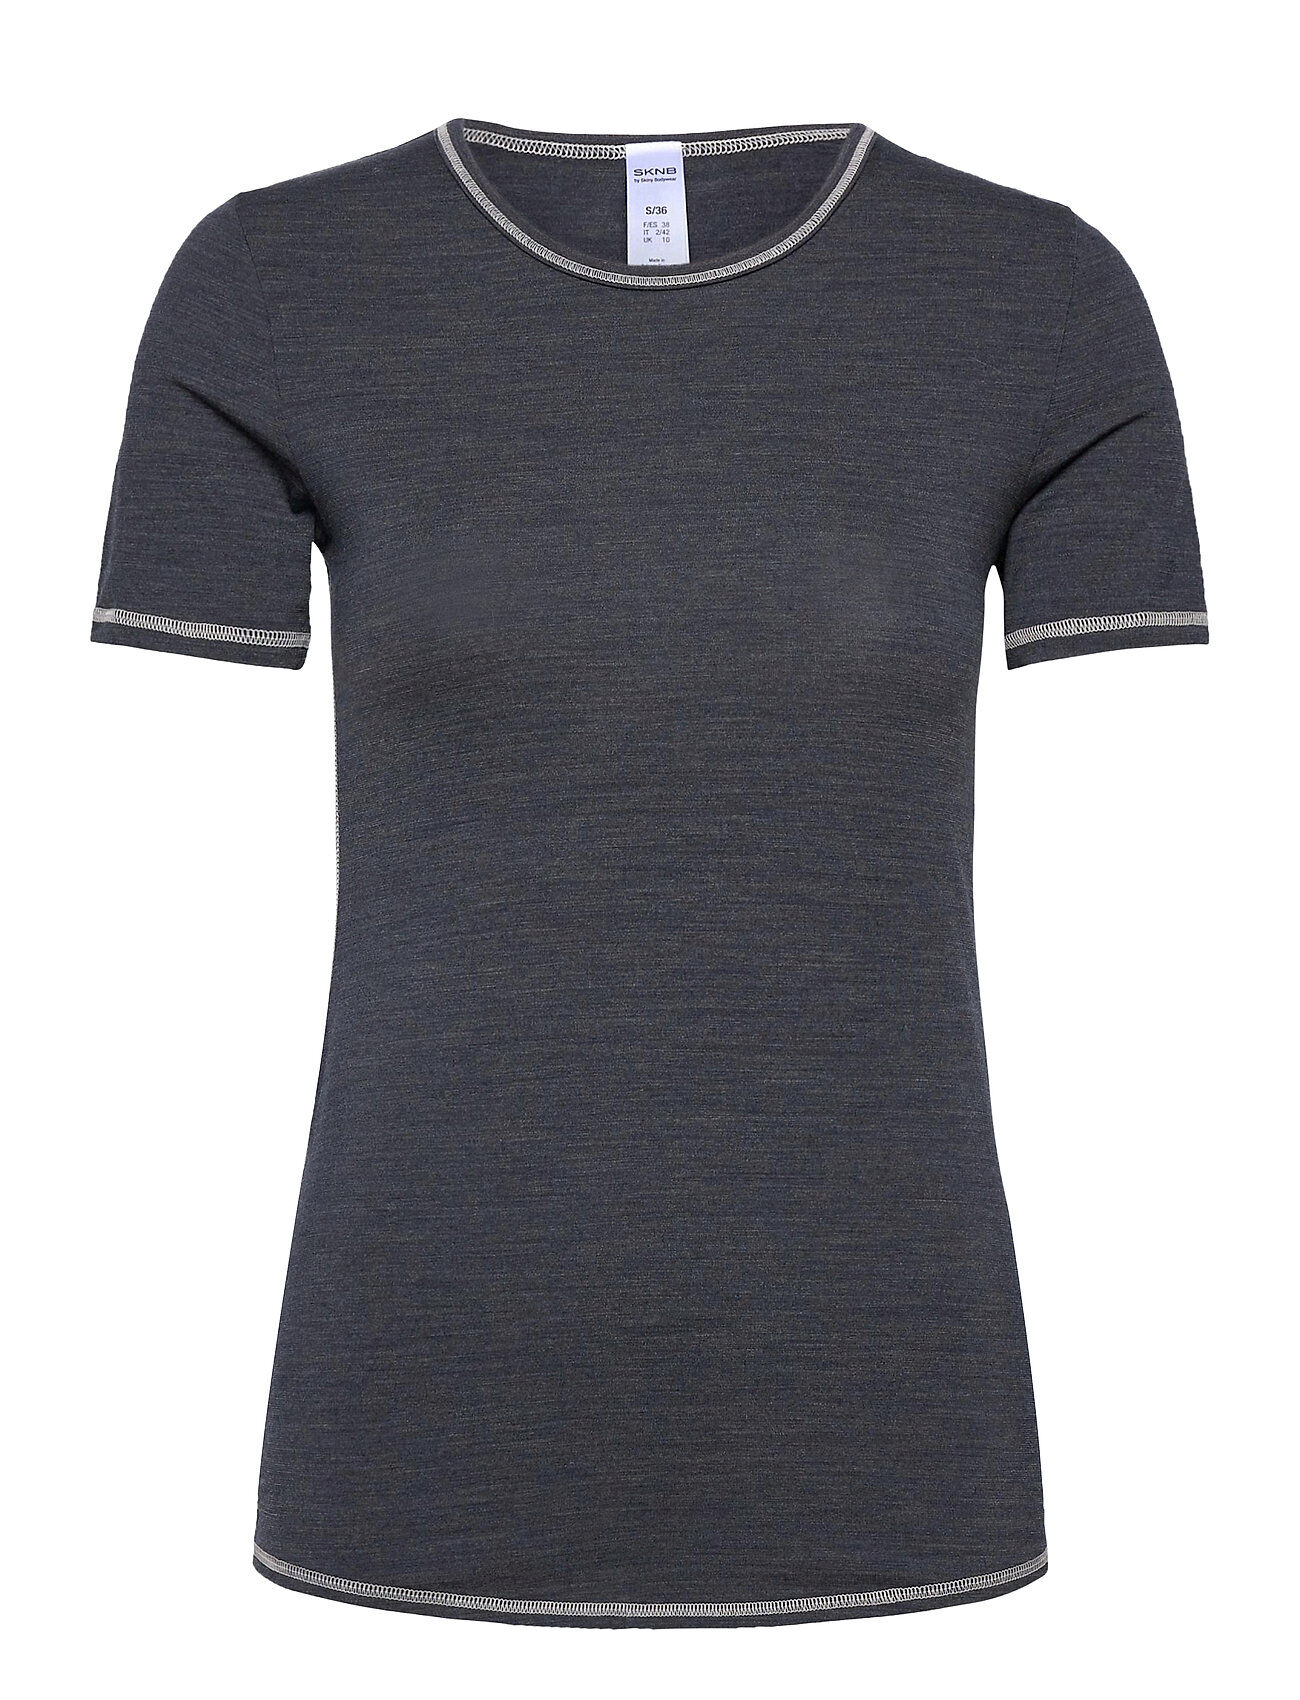 Skiny L. Shirt S/Slv T-shirts & Tops Short-sleeved Grå Skiny